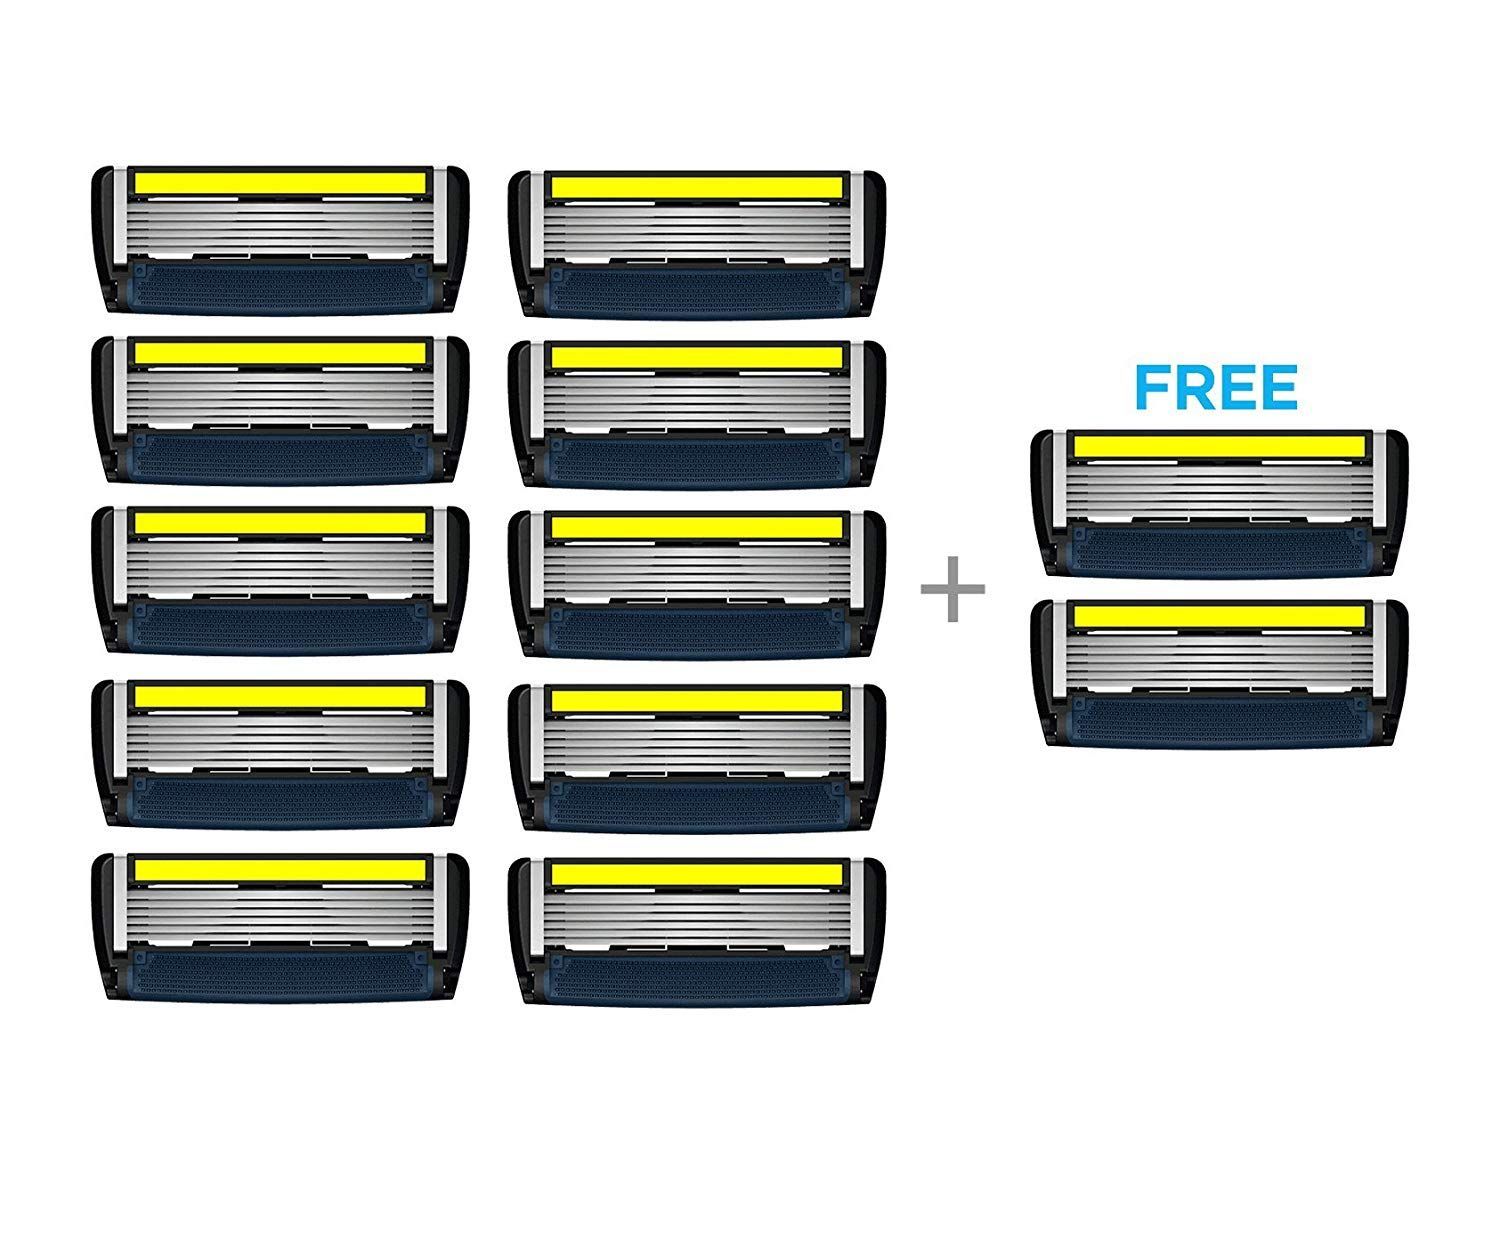 LetsShave Pro 6 Advance Razor Blades (Pack of 10 + Free Pack of 2)